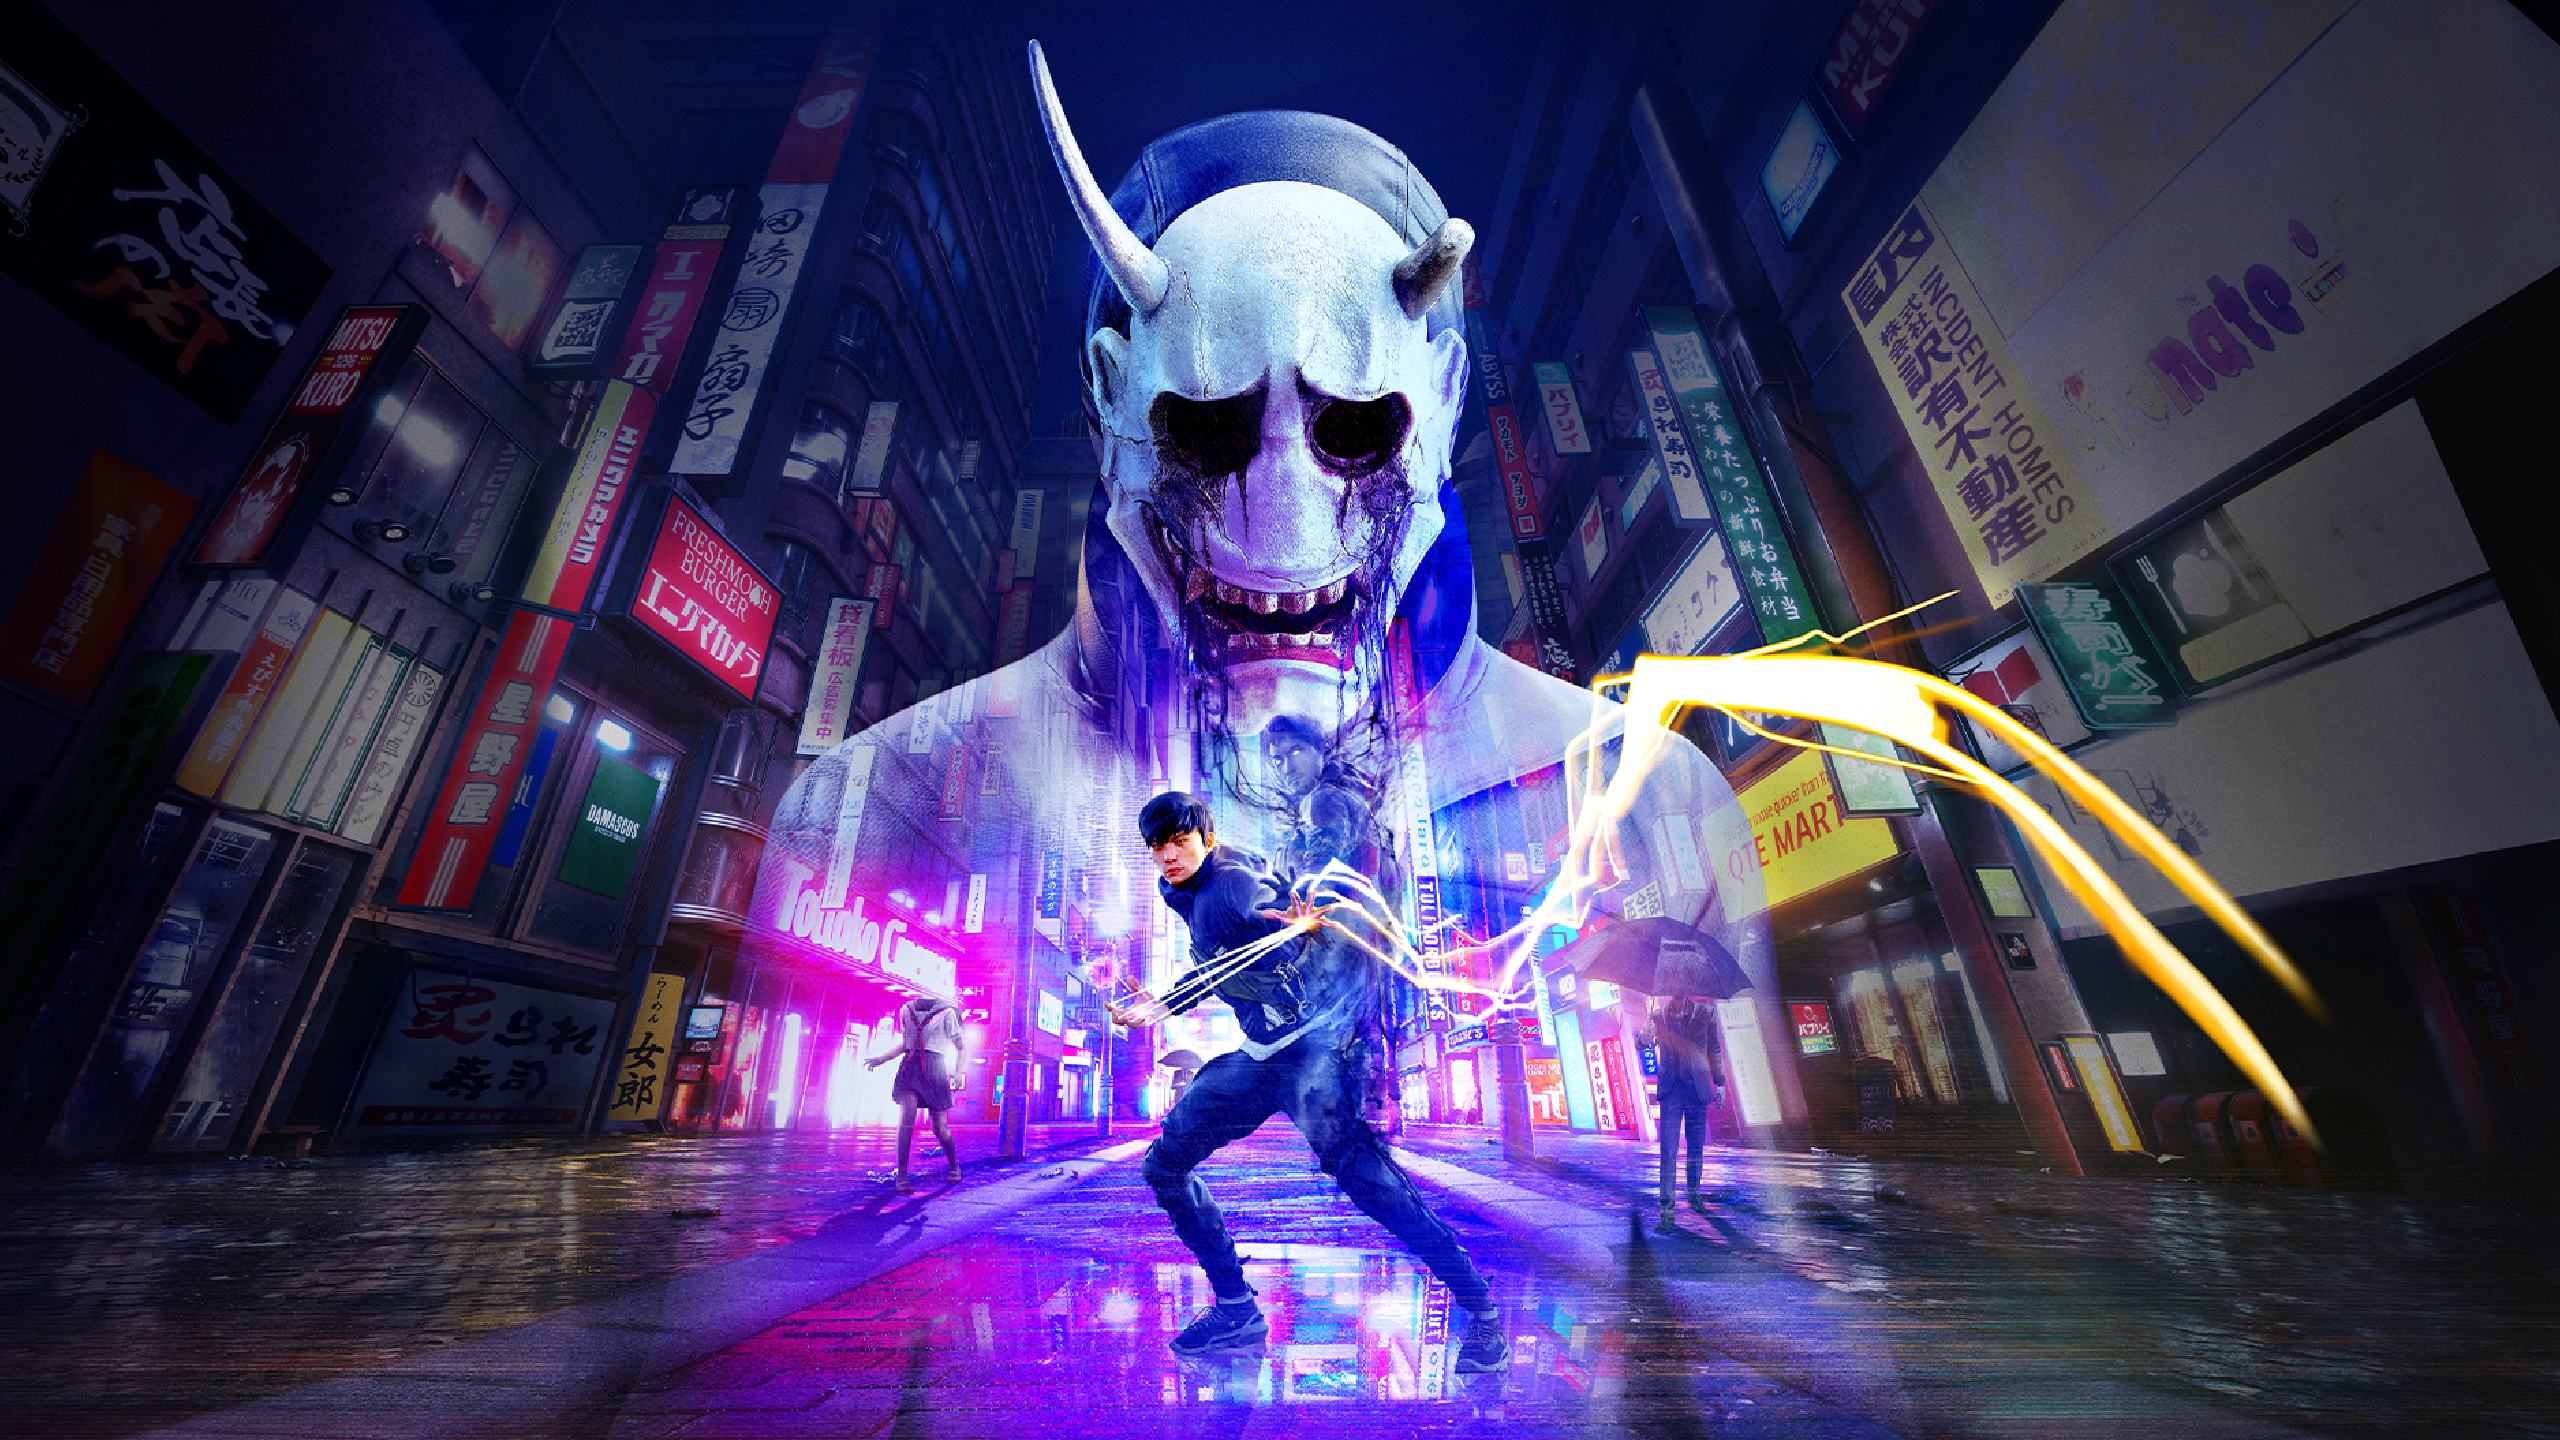 HD wallpaper of GhostWire: Tokyo featuring a character battling a skull-headed specter in a neon-lit Tokyo street.